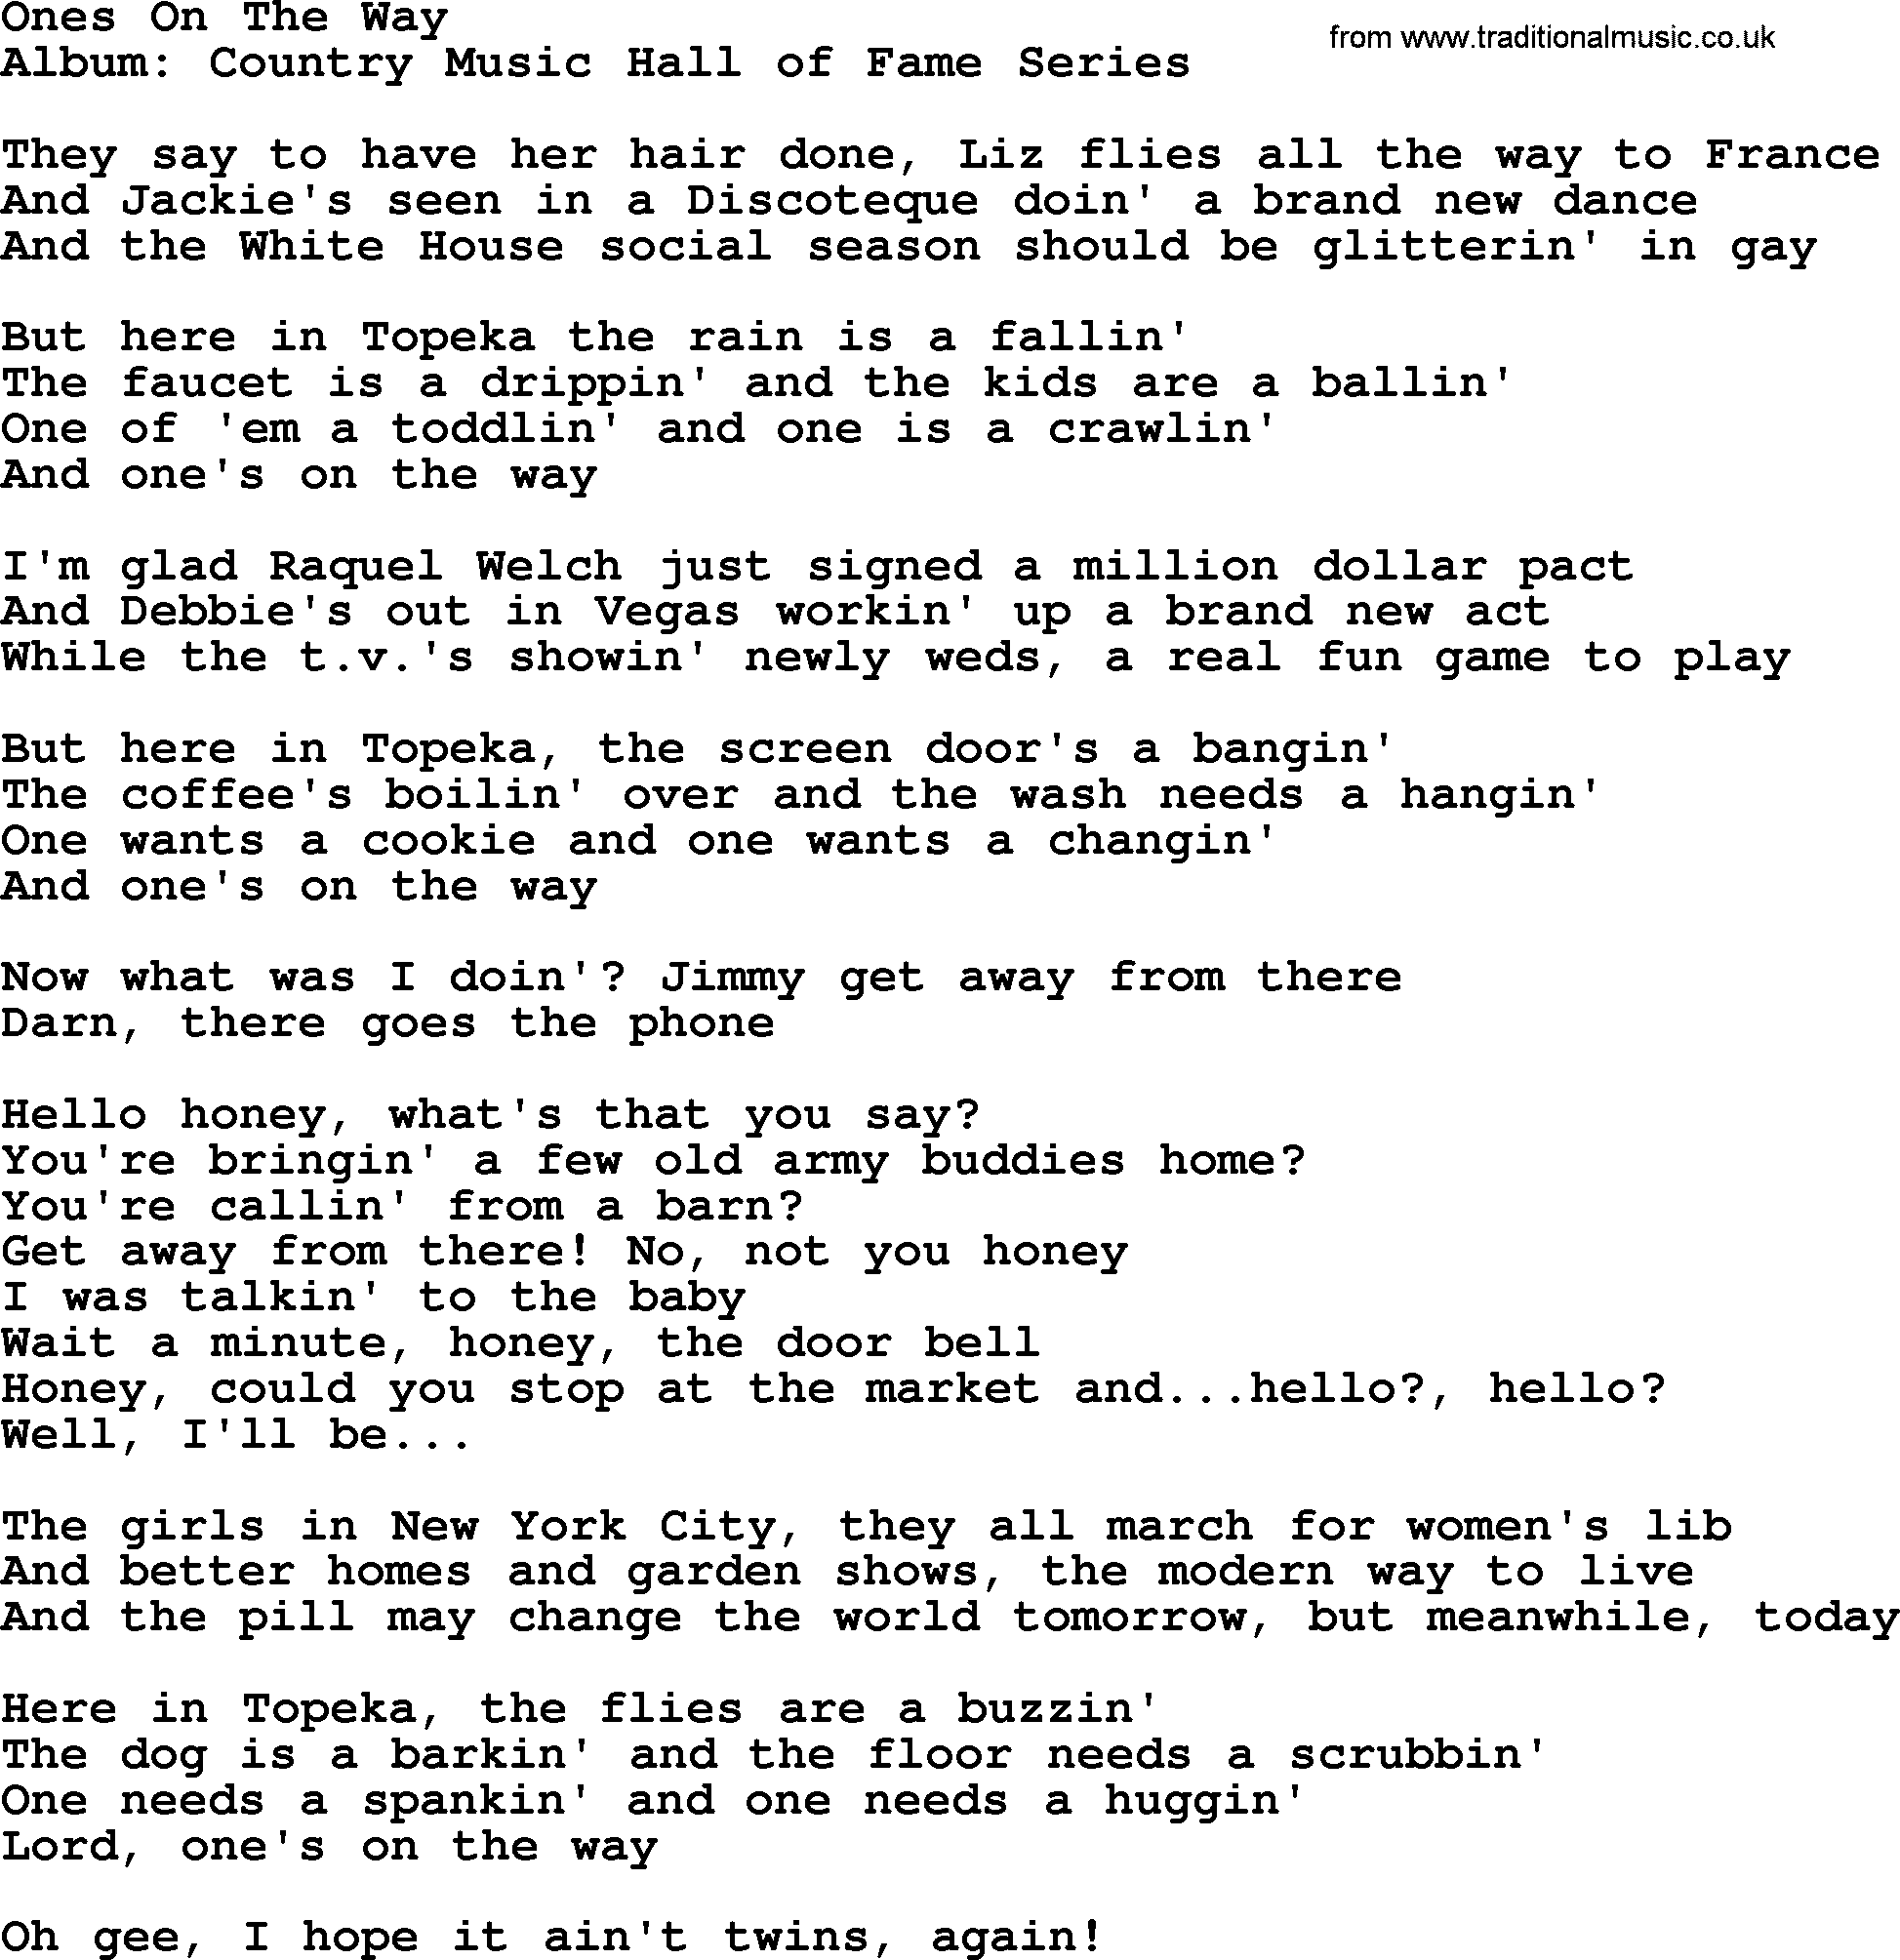 Loretta Lynn song: Ones On The Way lyrics